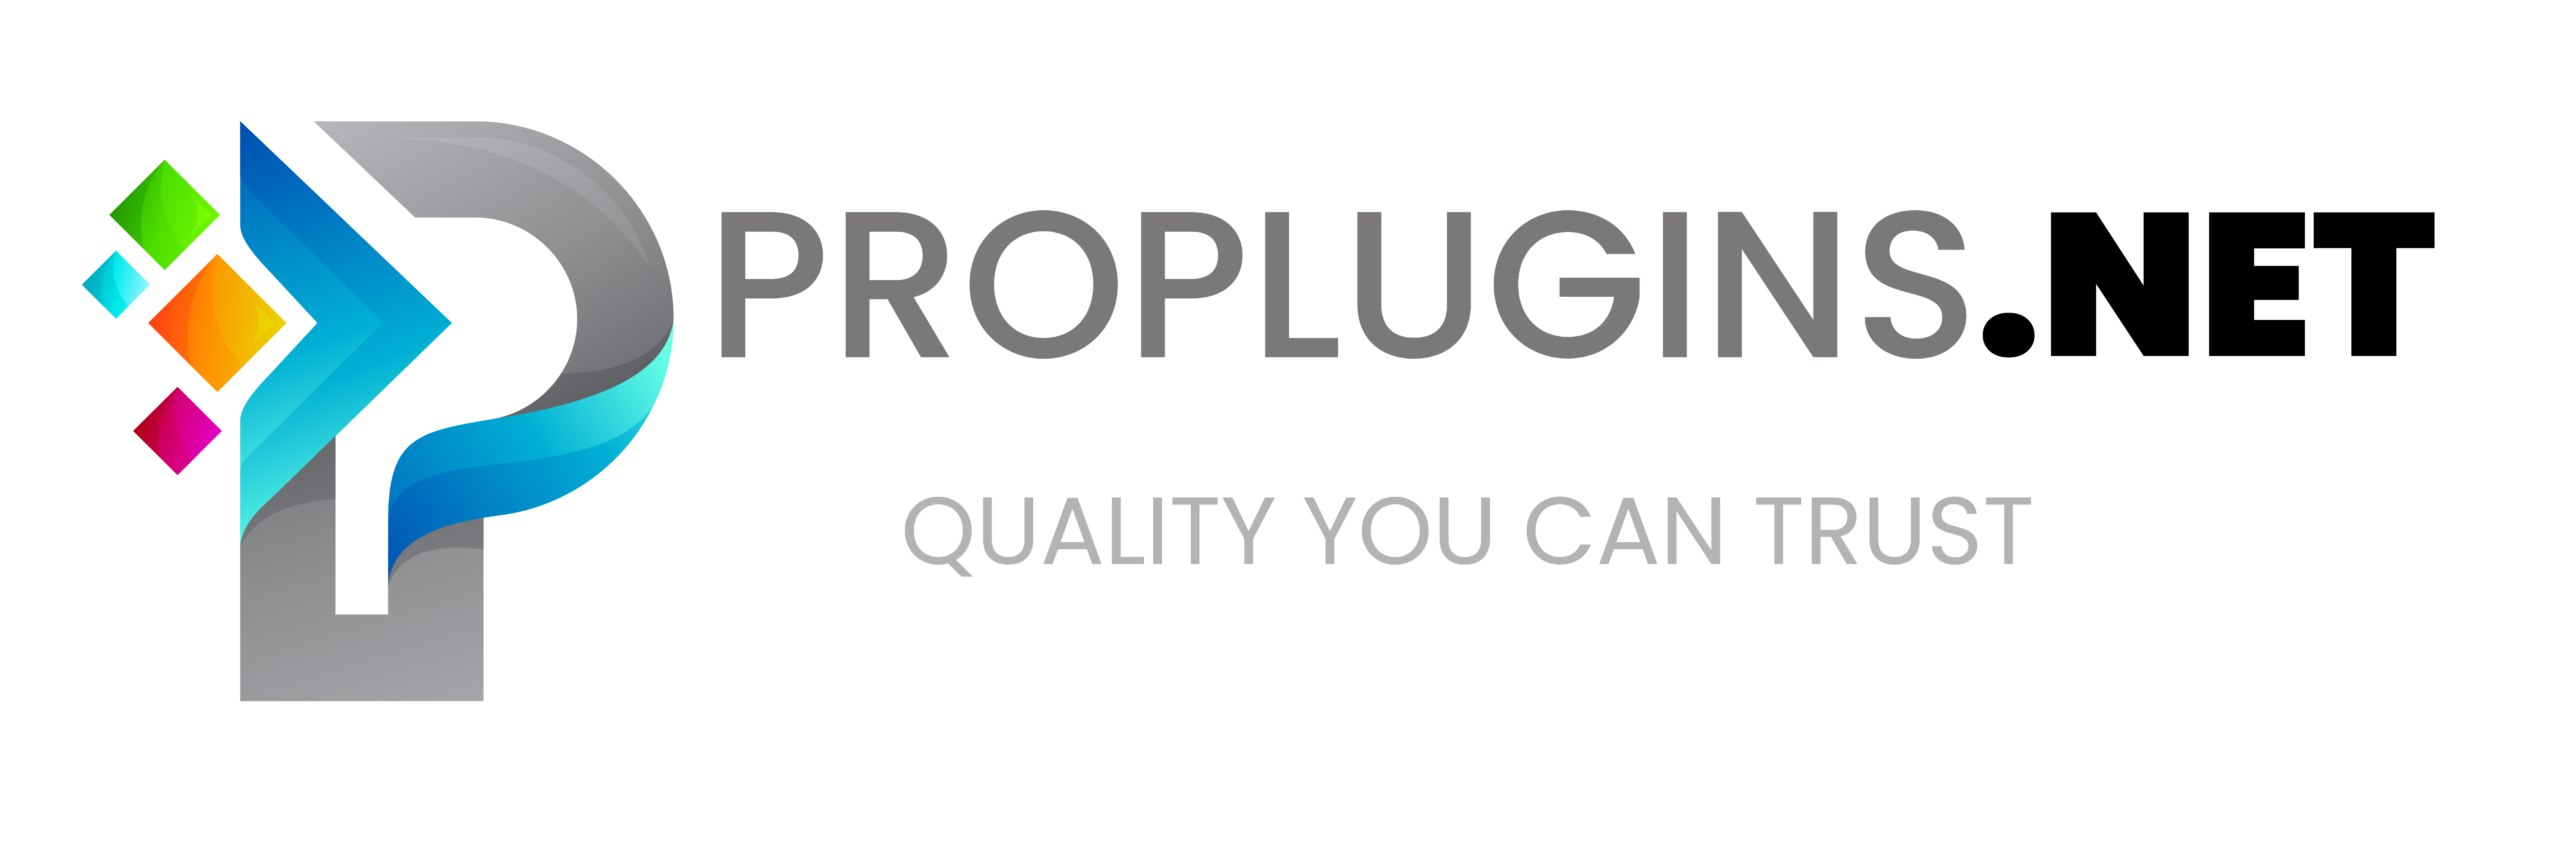 proplugins.net logo